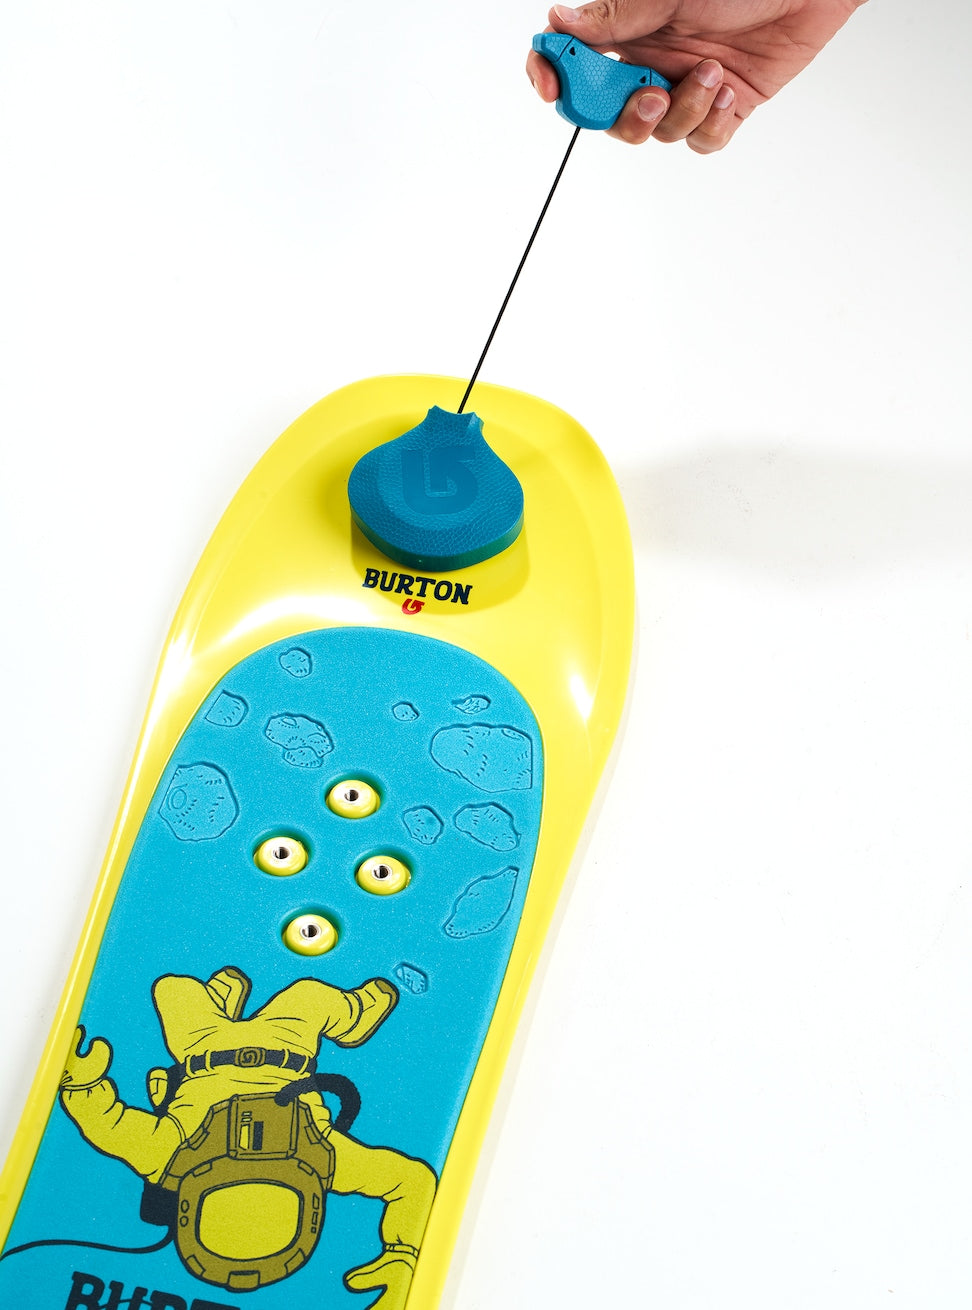 toddler snowboarding gear series: @burtonsnowboard riglet board reel I